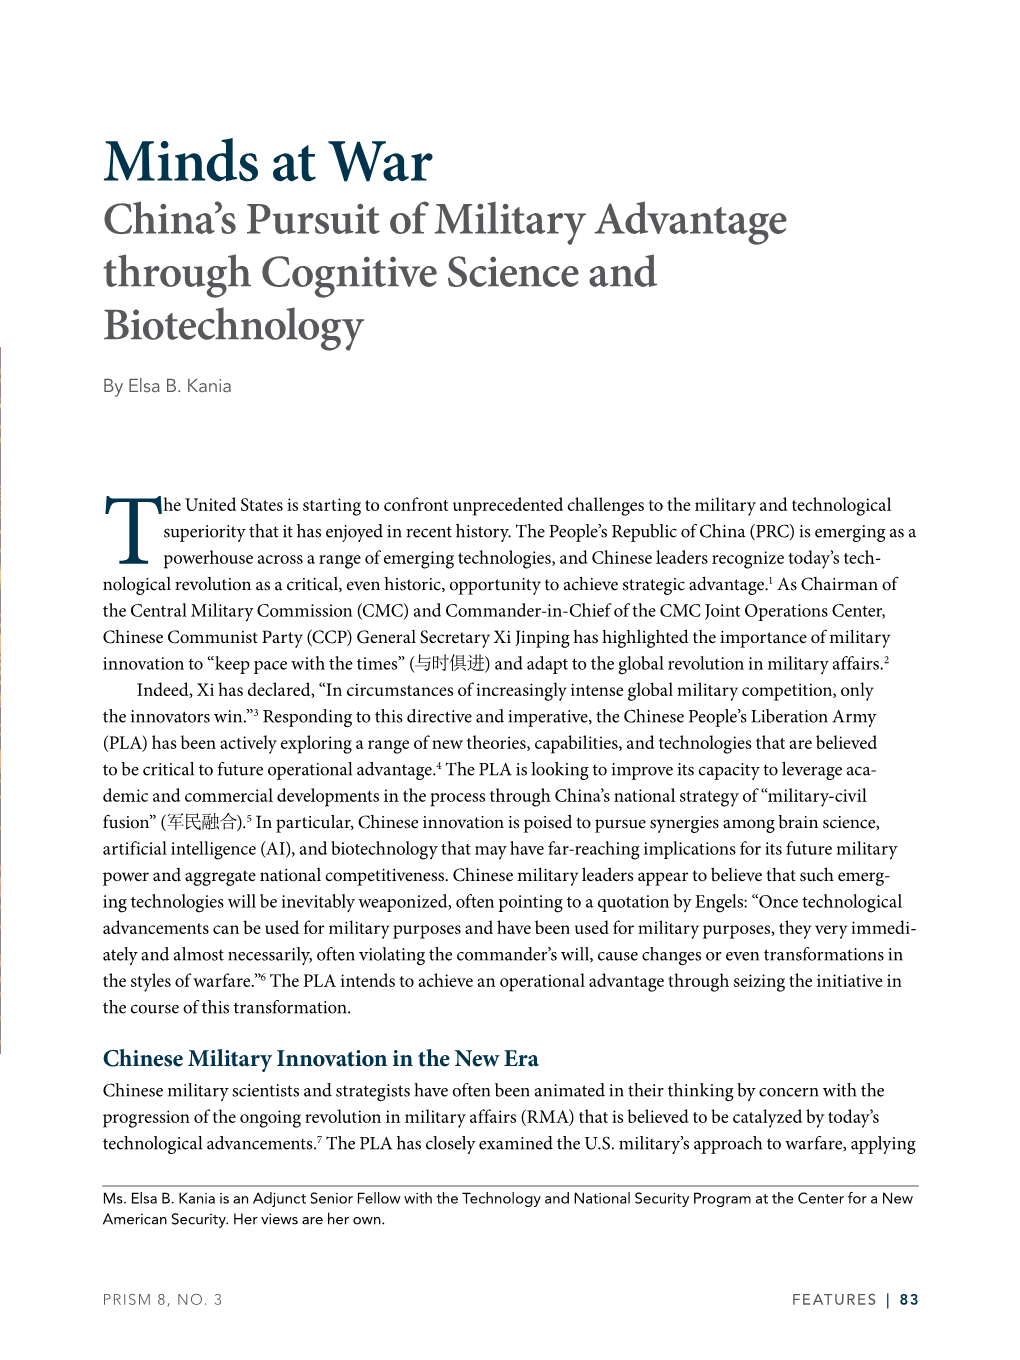 Minds at War: China's Pursuit of Military Advantage Through